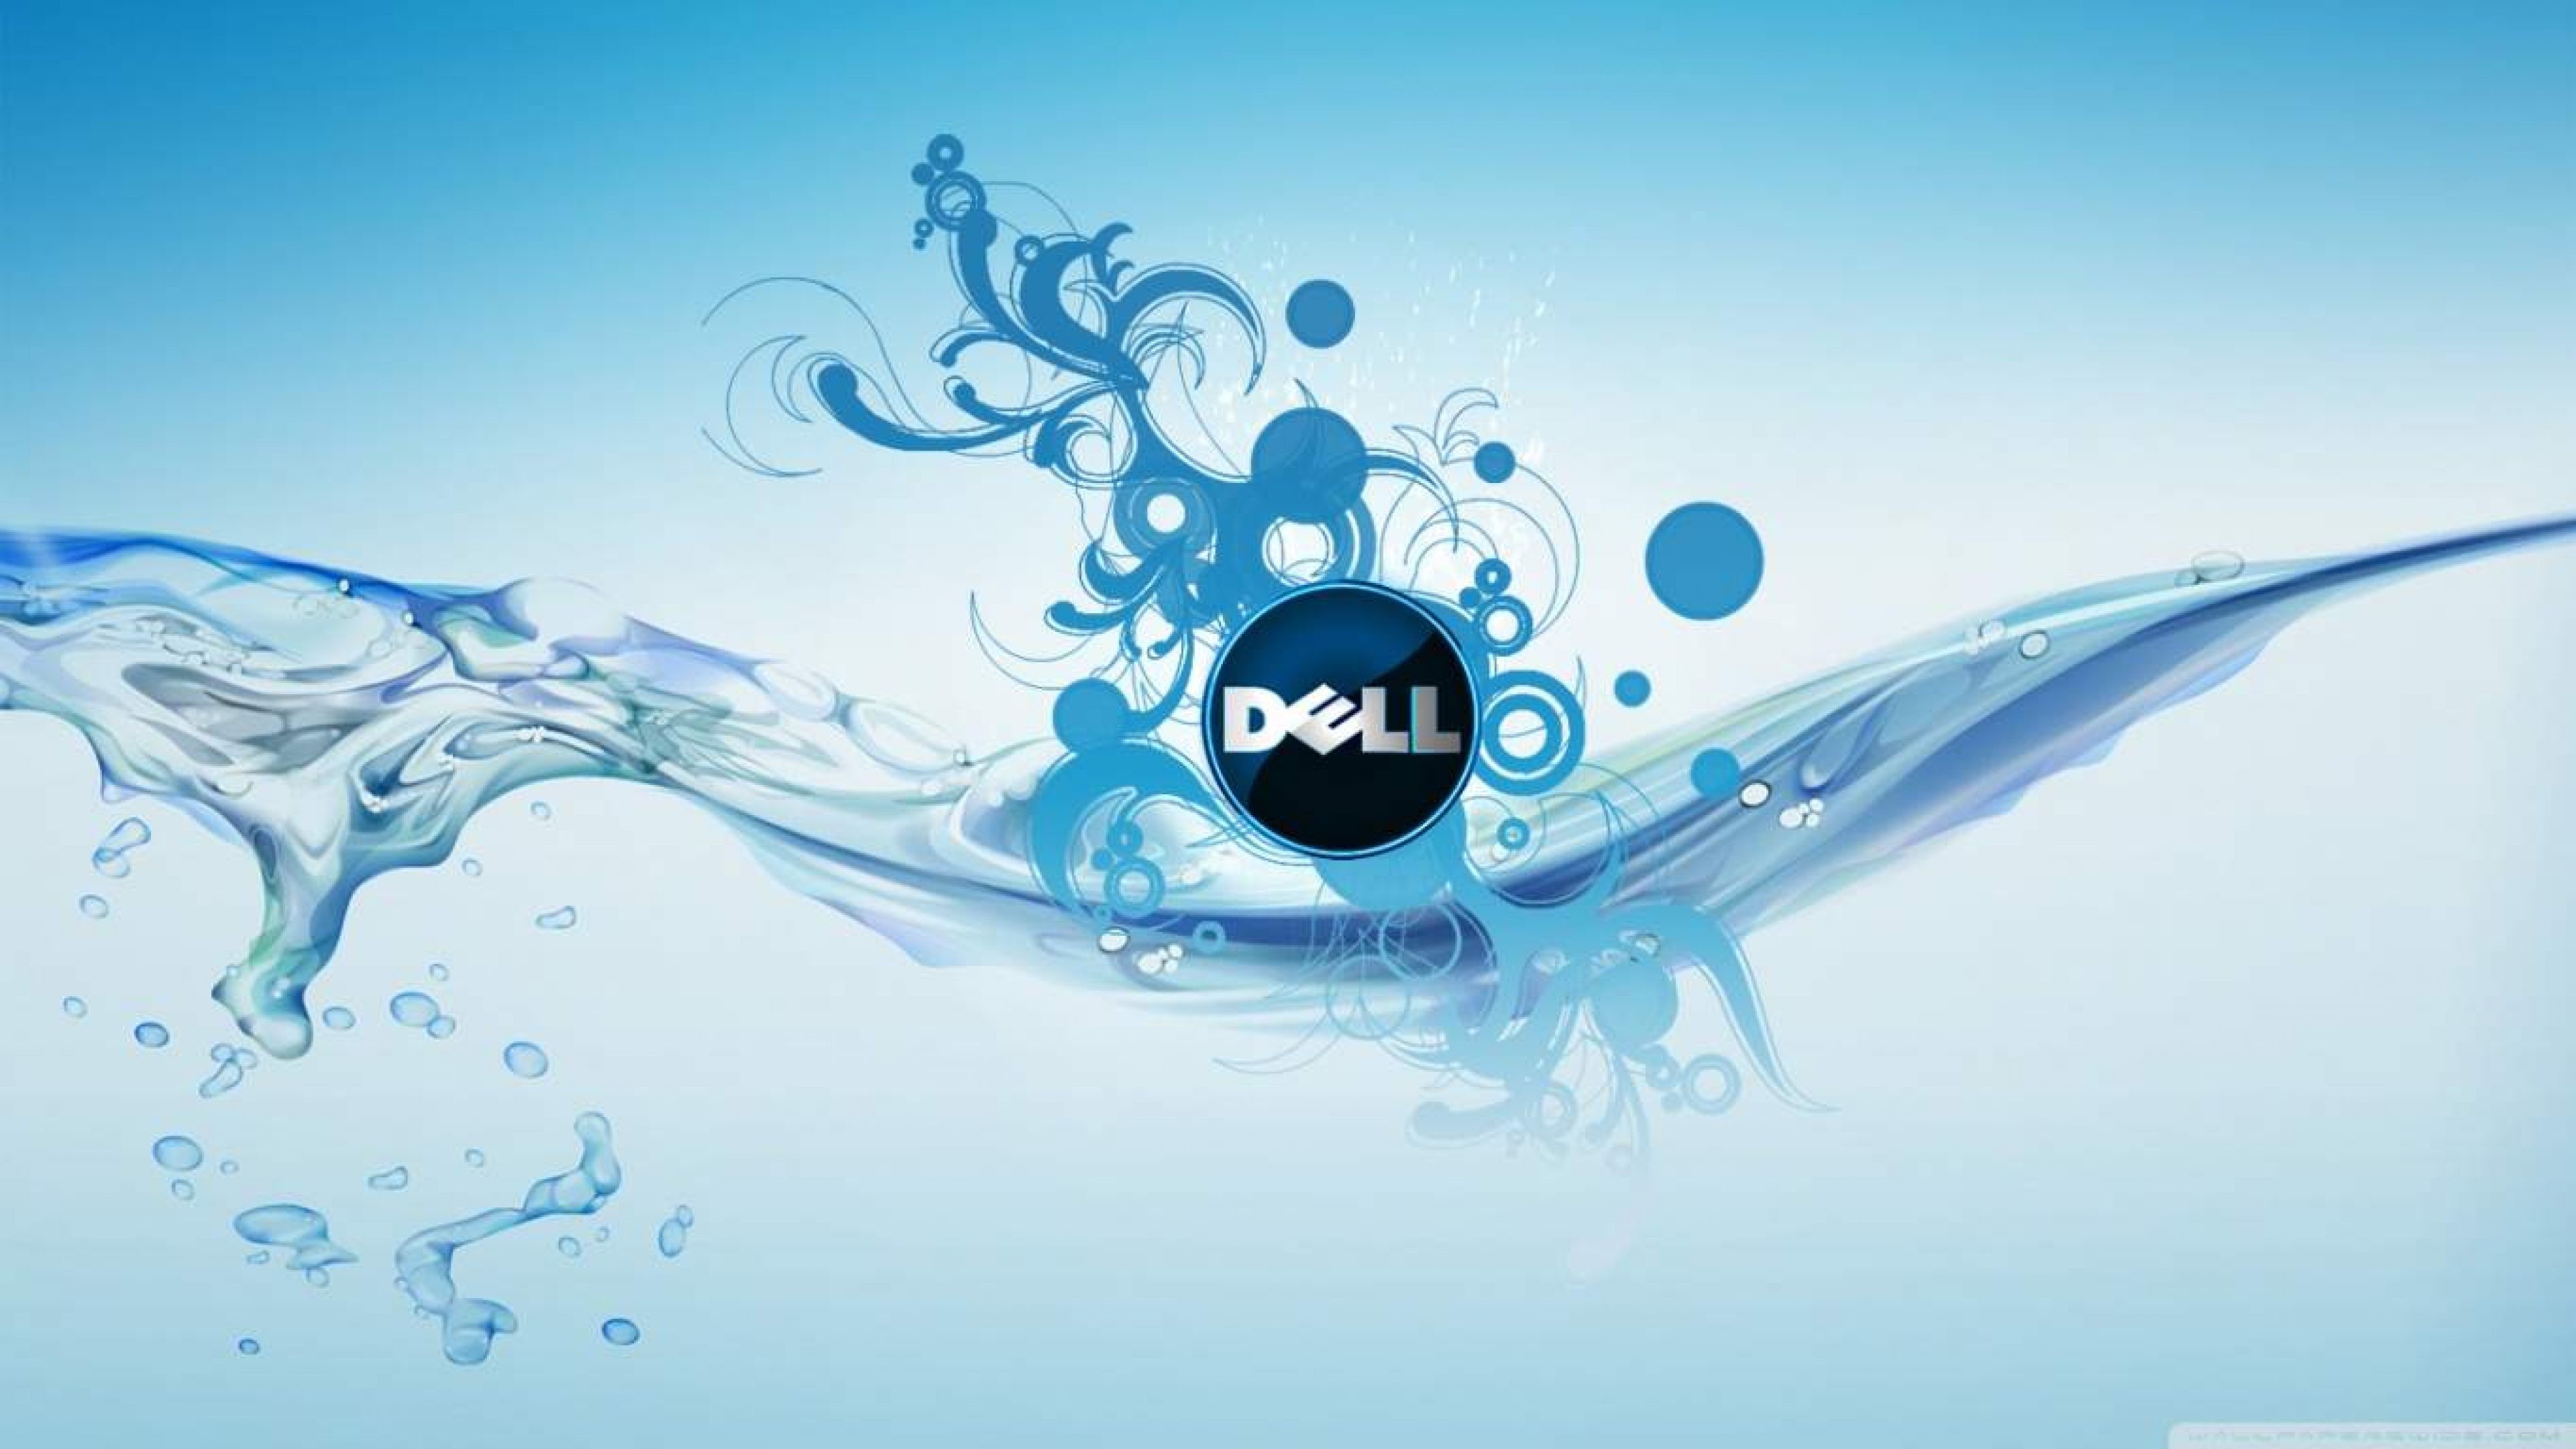 Dell Wallpaper Windows Image For